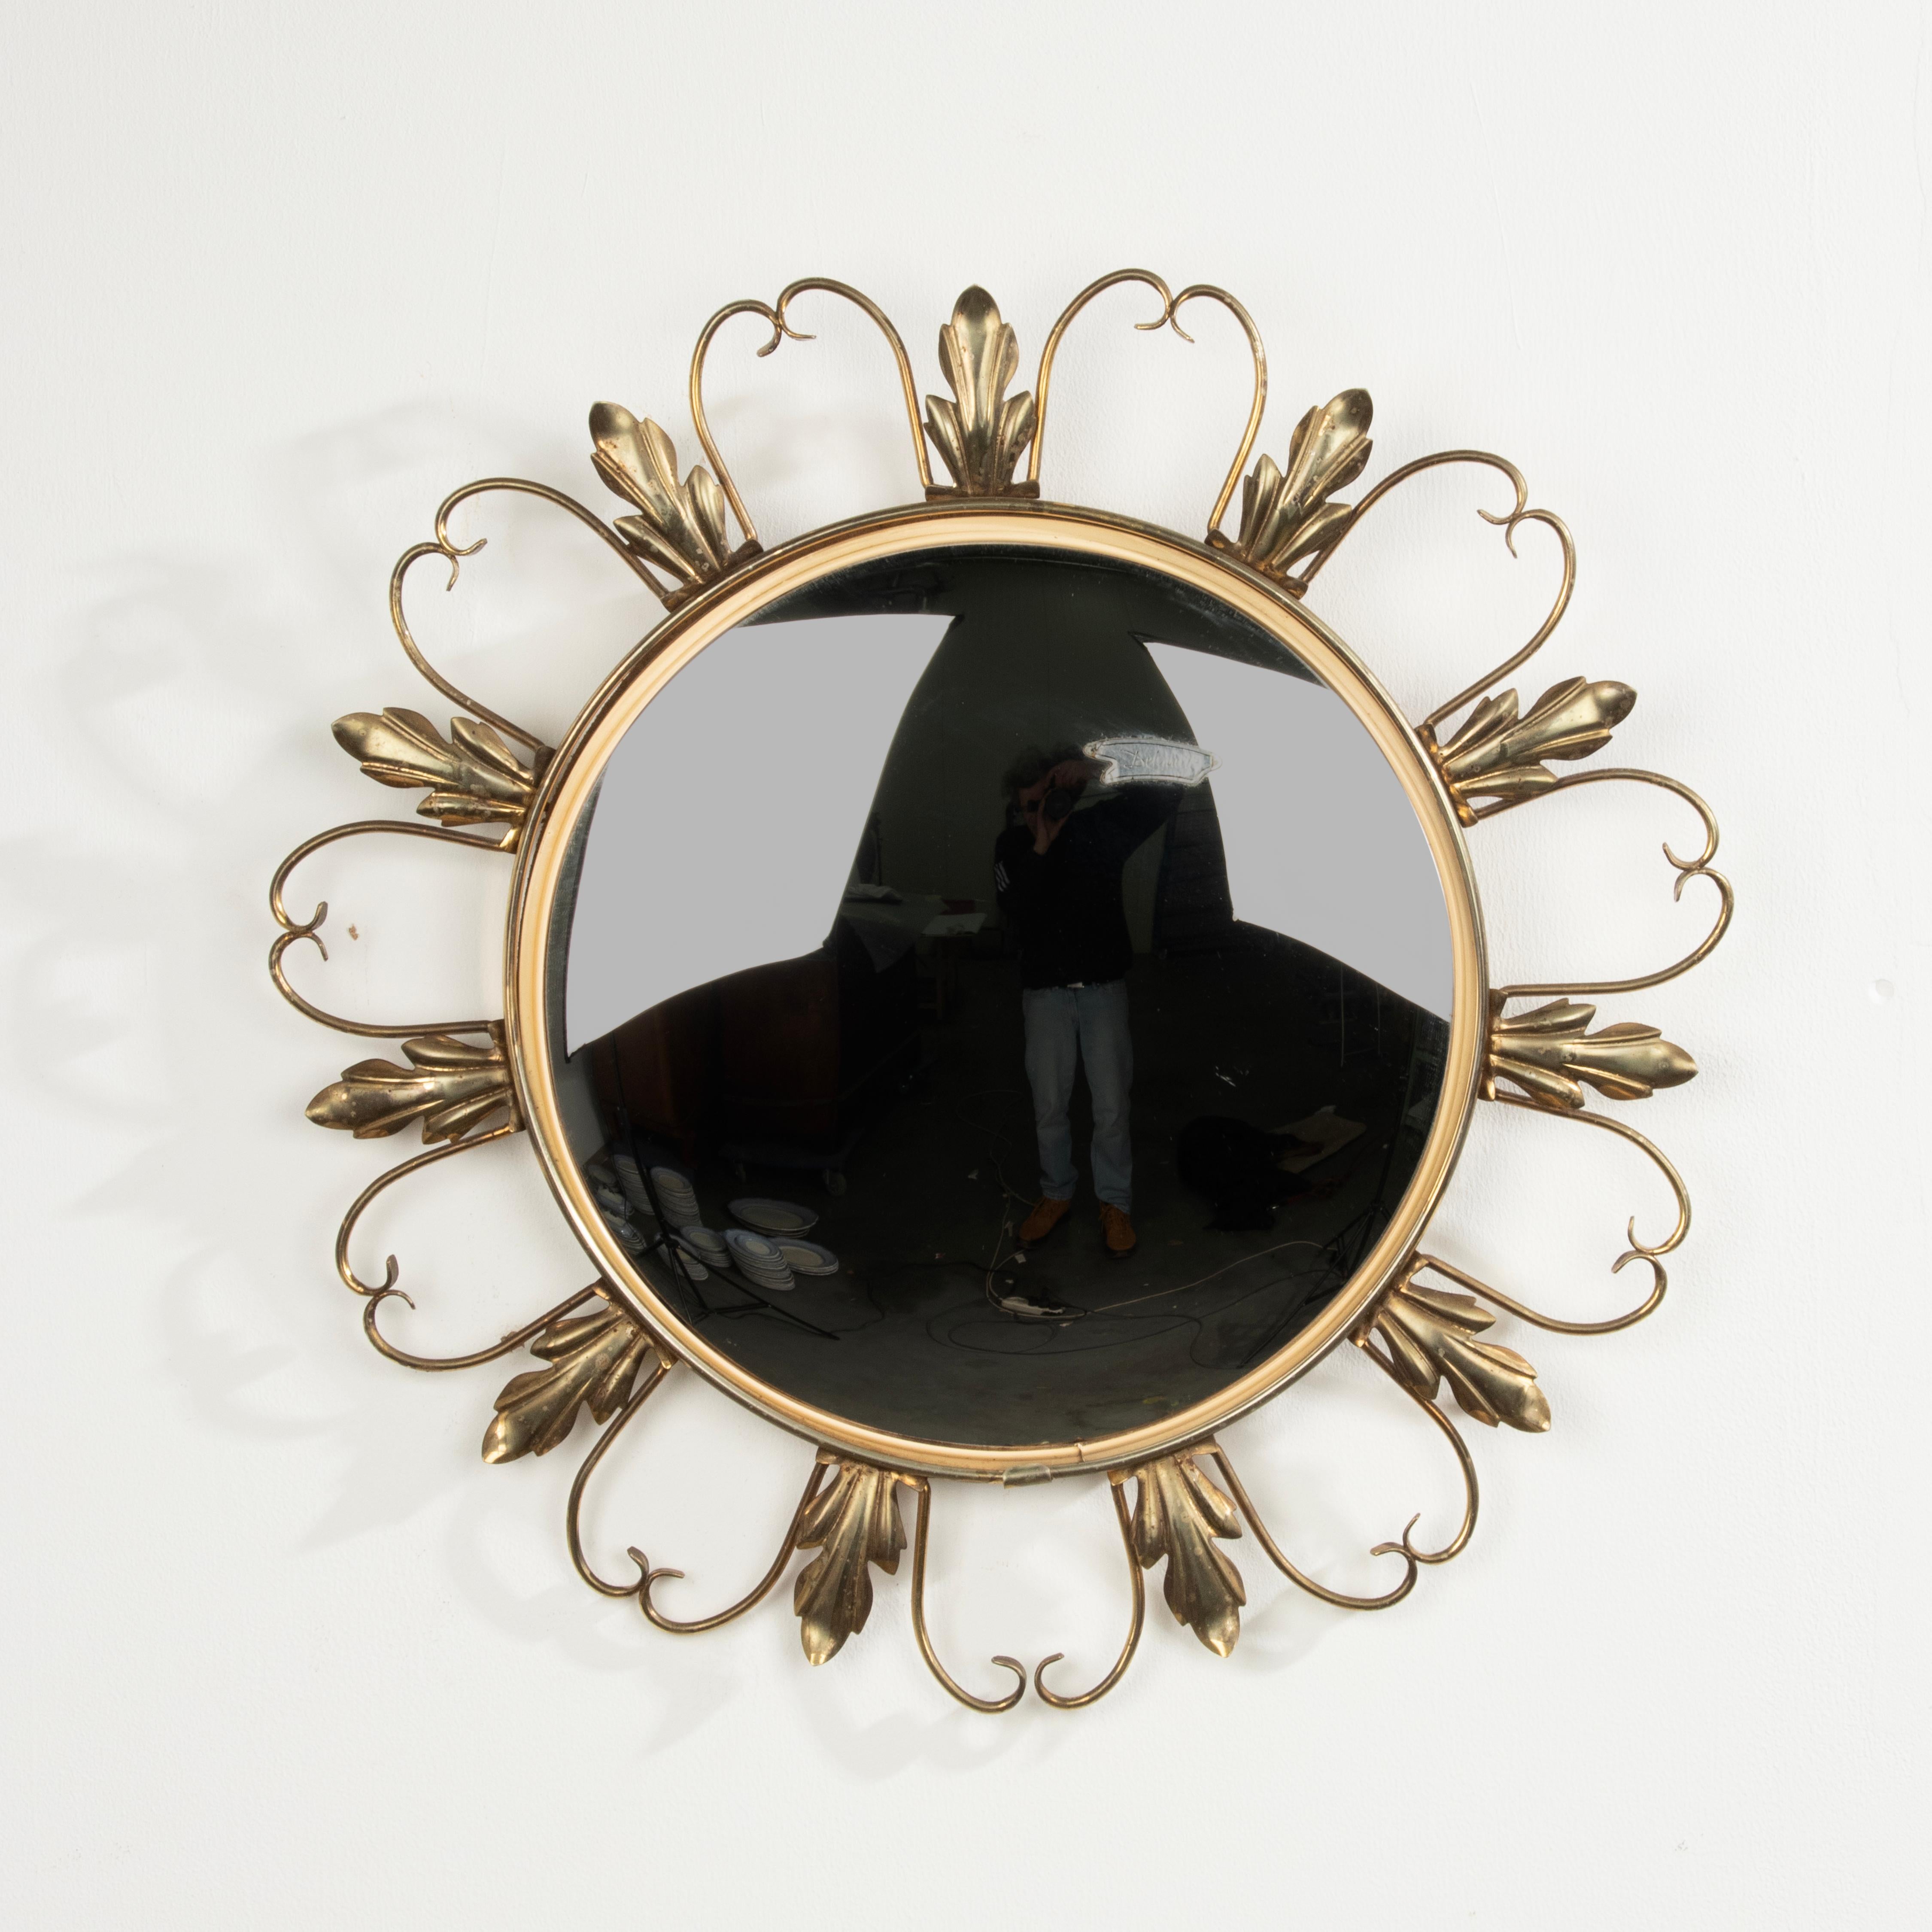 An elegant convex wall mirror, also called 